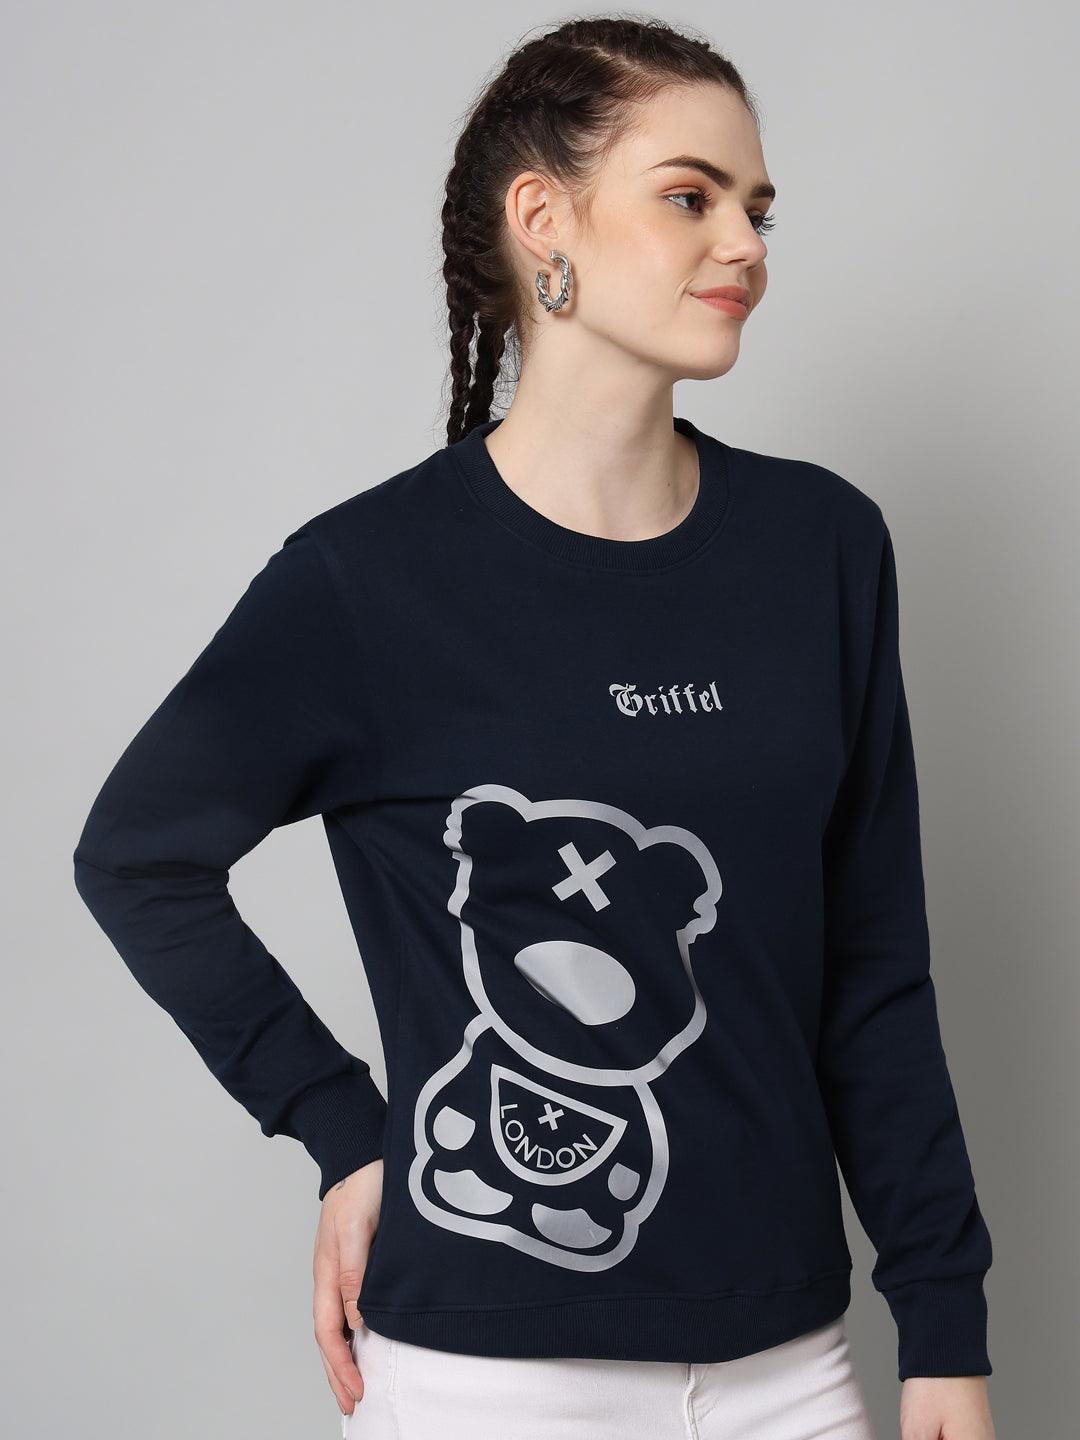 Griffel Women’s Teddy Print Round Neck Navy Grey Cotton Fleece Full Sleeve Sweatshirt - griffel